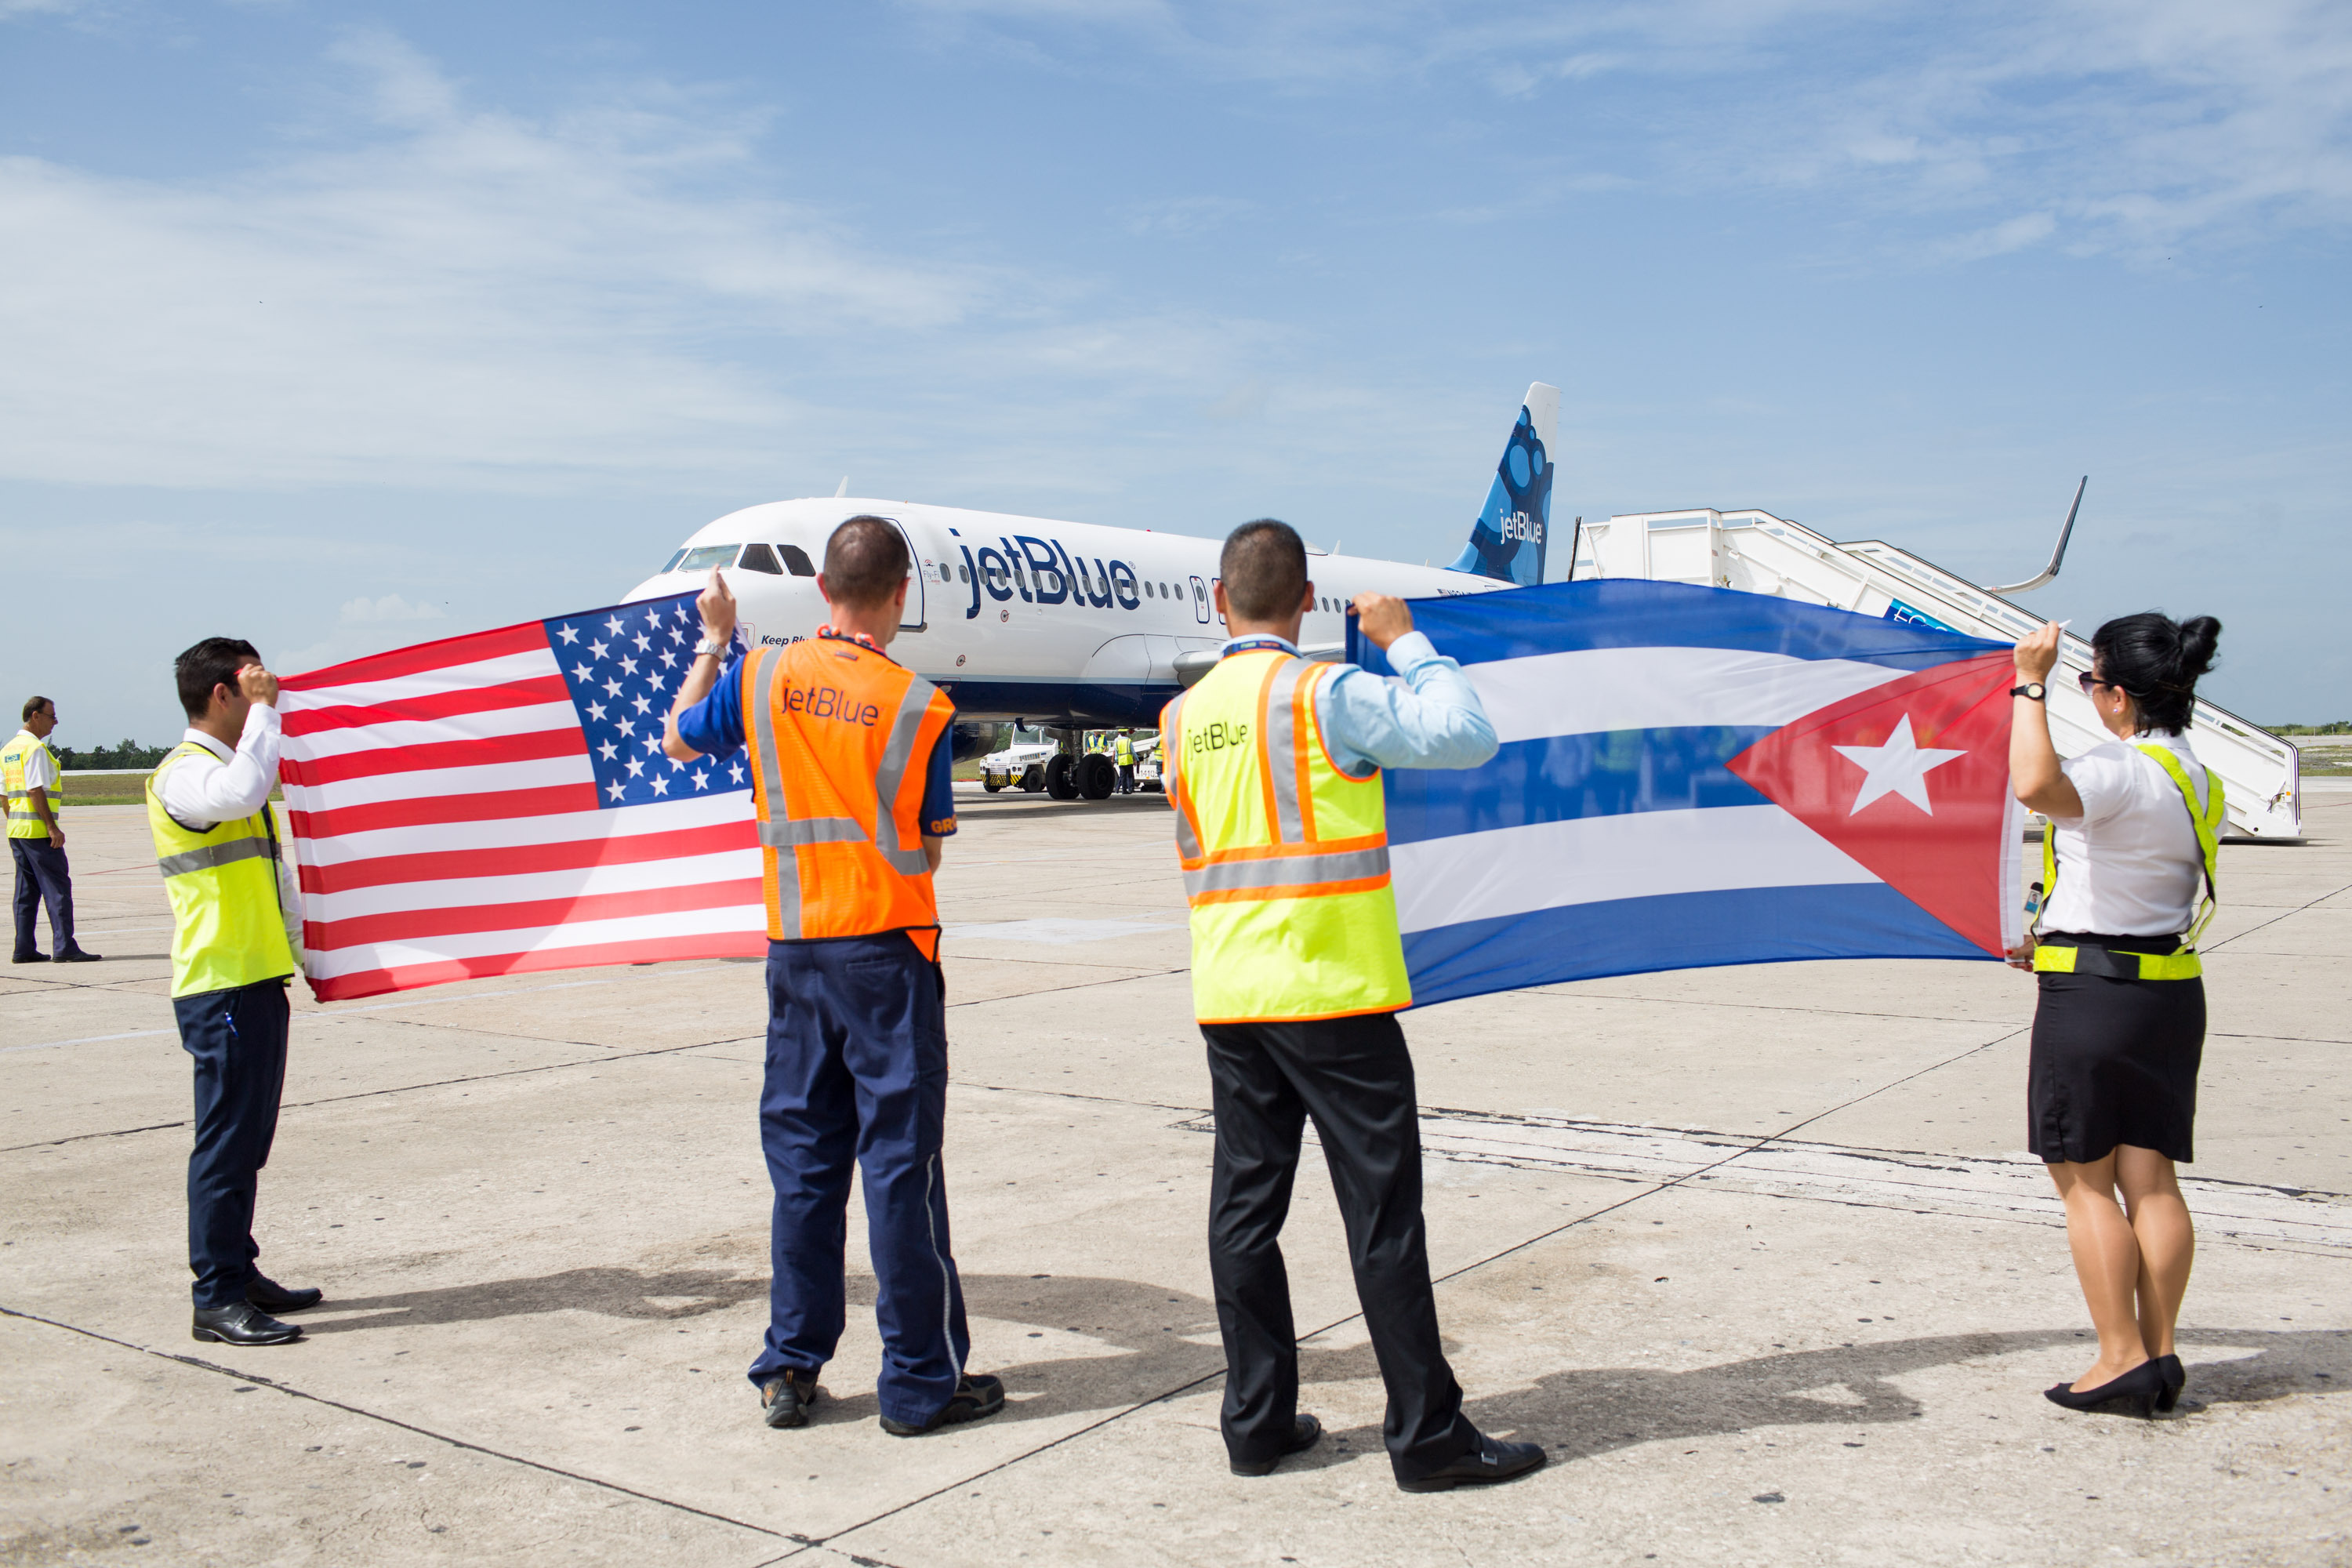 WestJet Cargo launches inaugural flights to Havana, Cuba